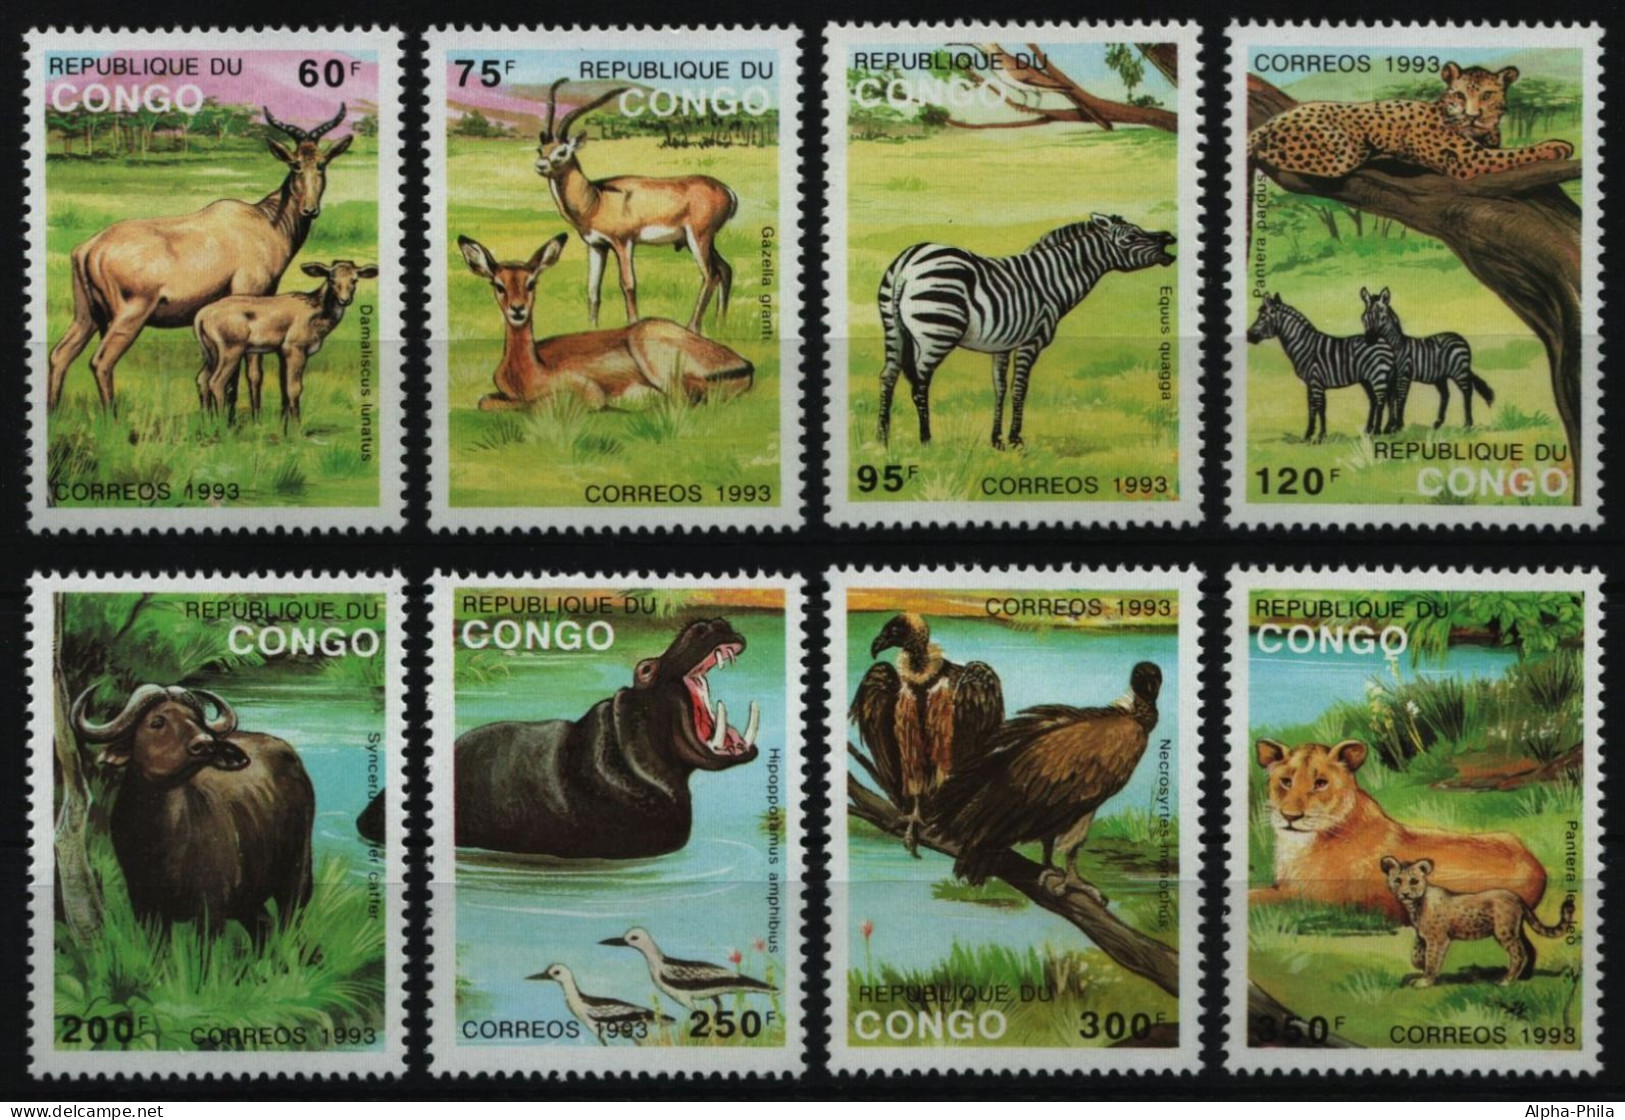 Kongo-Brazzaville 1993 - Mi-Nr. 1363-1370 I ** - MNH - Wildtiere / Wild Animals - Mint/hinged